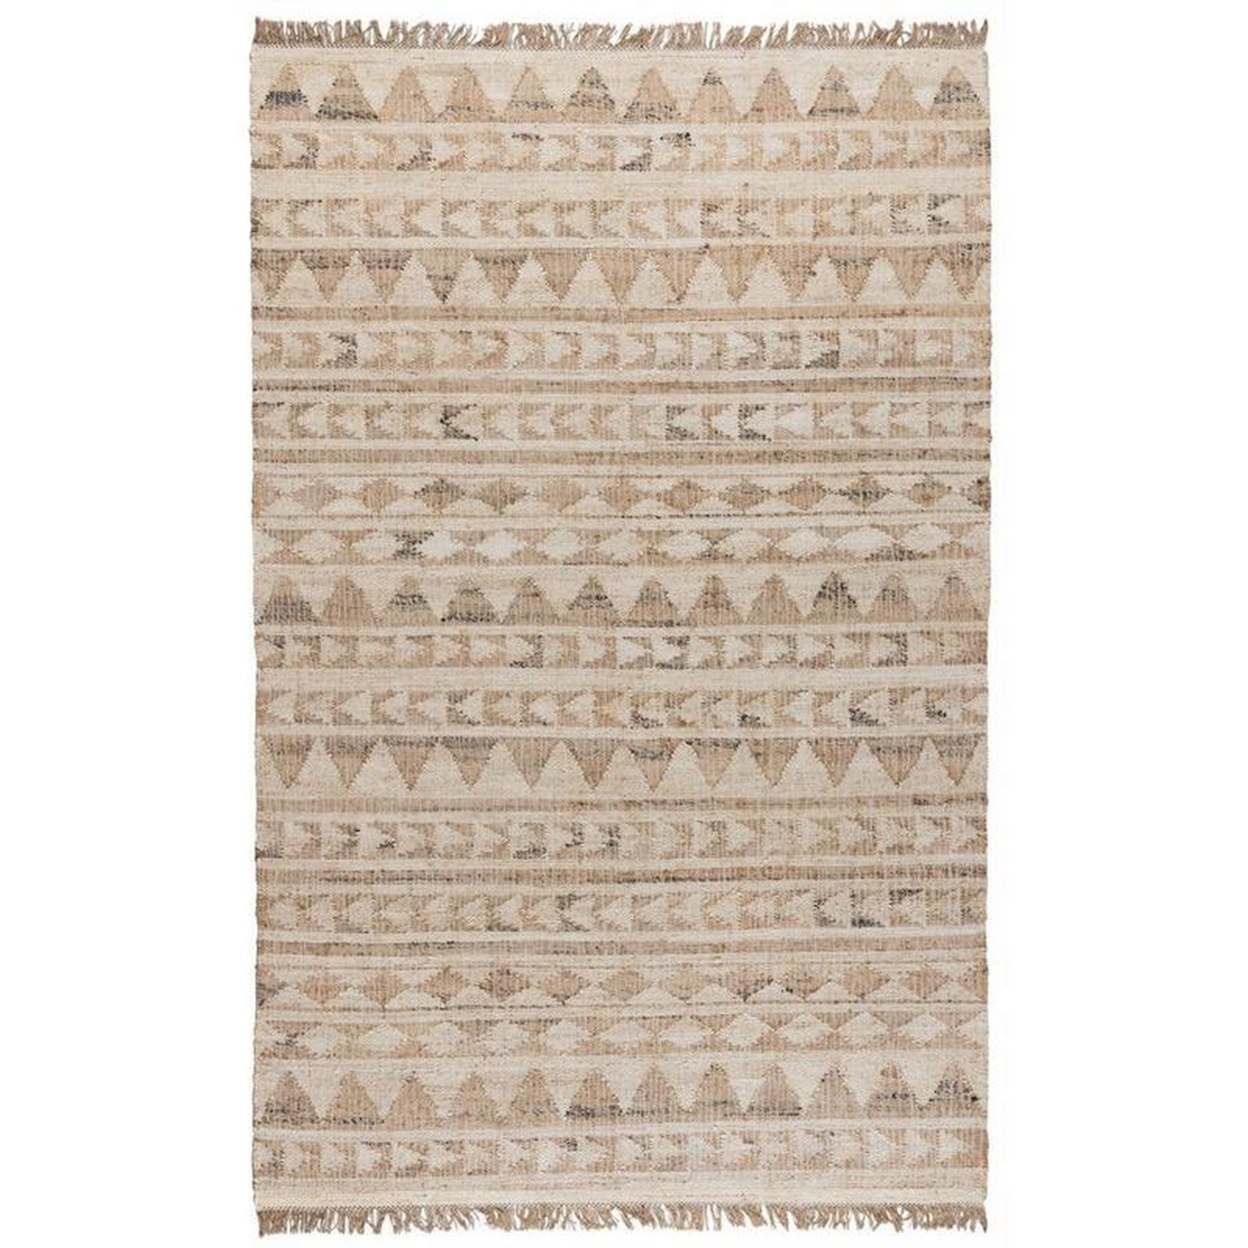 Moly 10 X 8 Tassel Area Rug, Tribal Triangle Pattern, Brown Handwoven Jute - Saltoro Sherpi